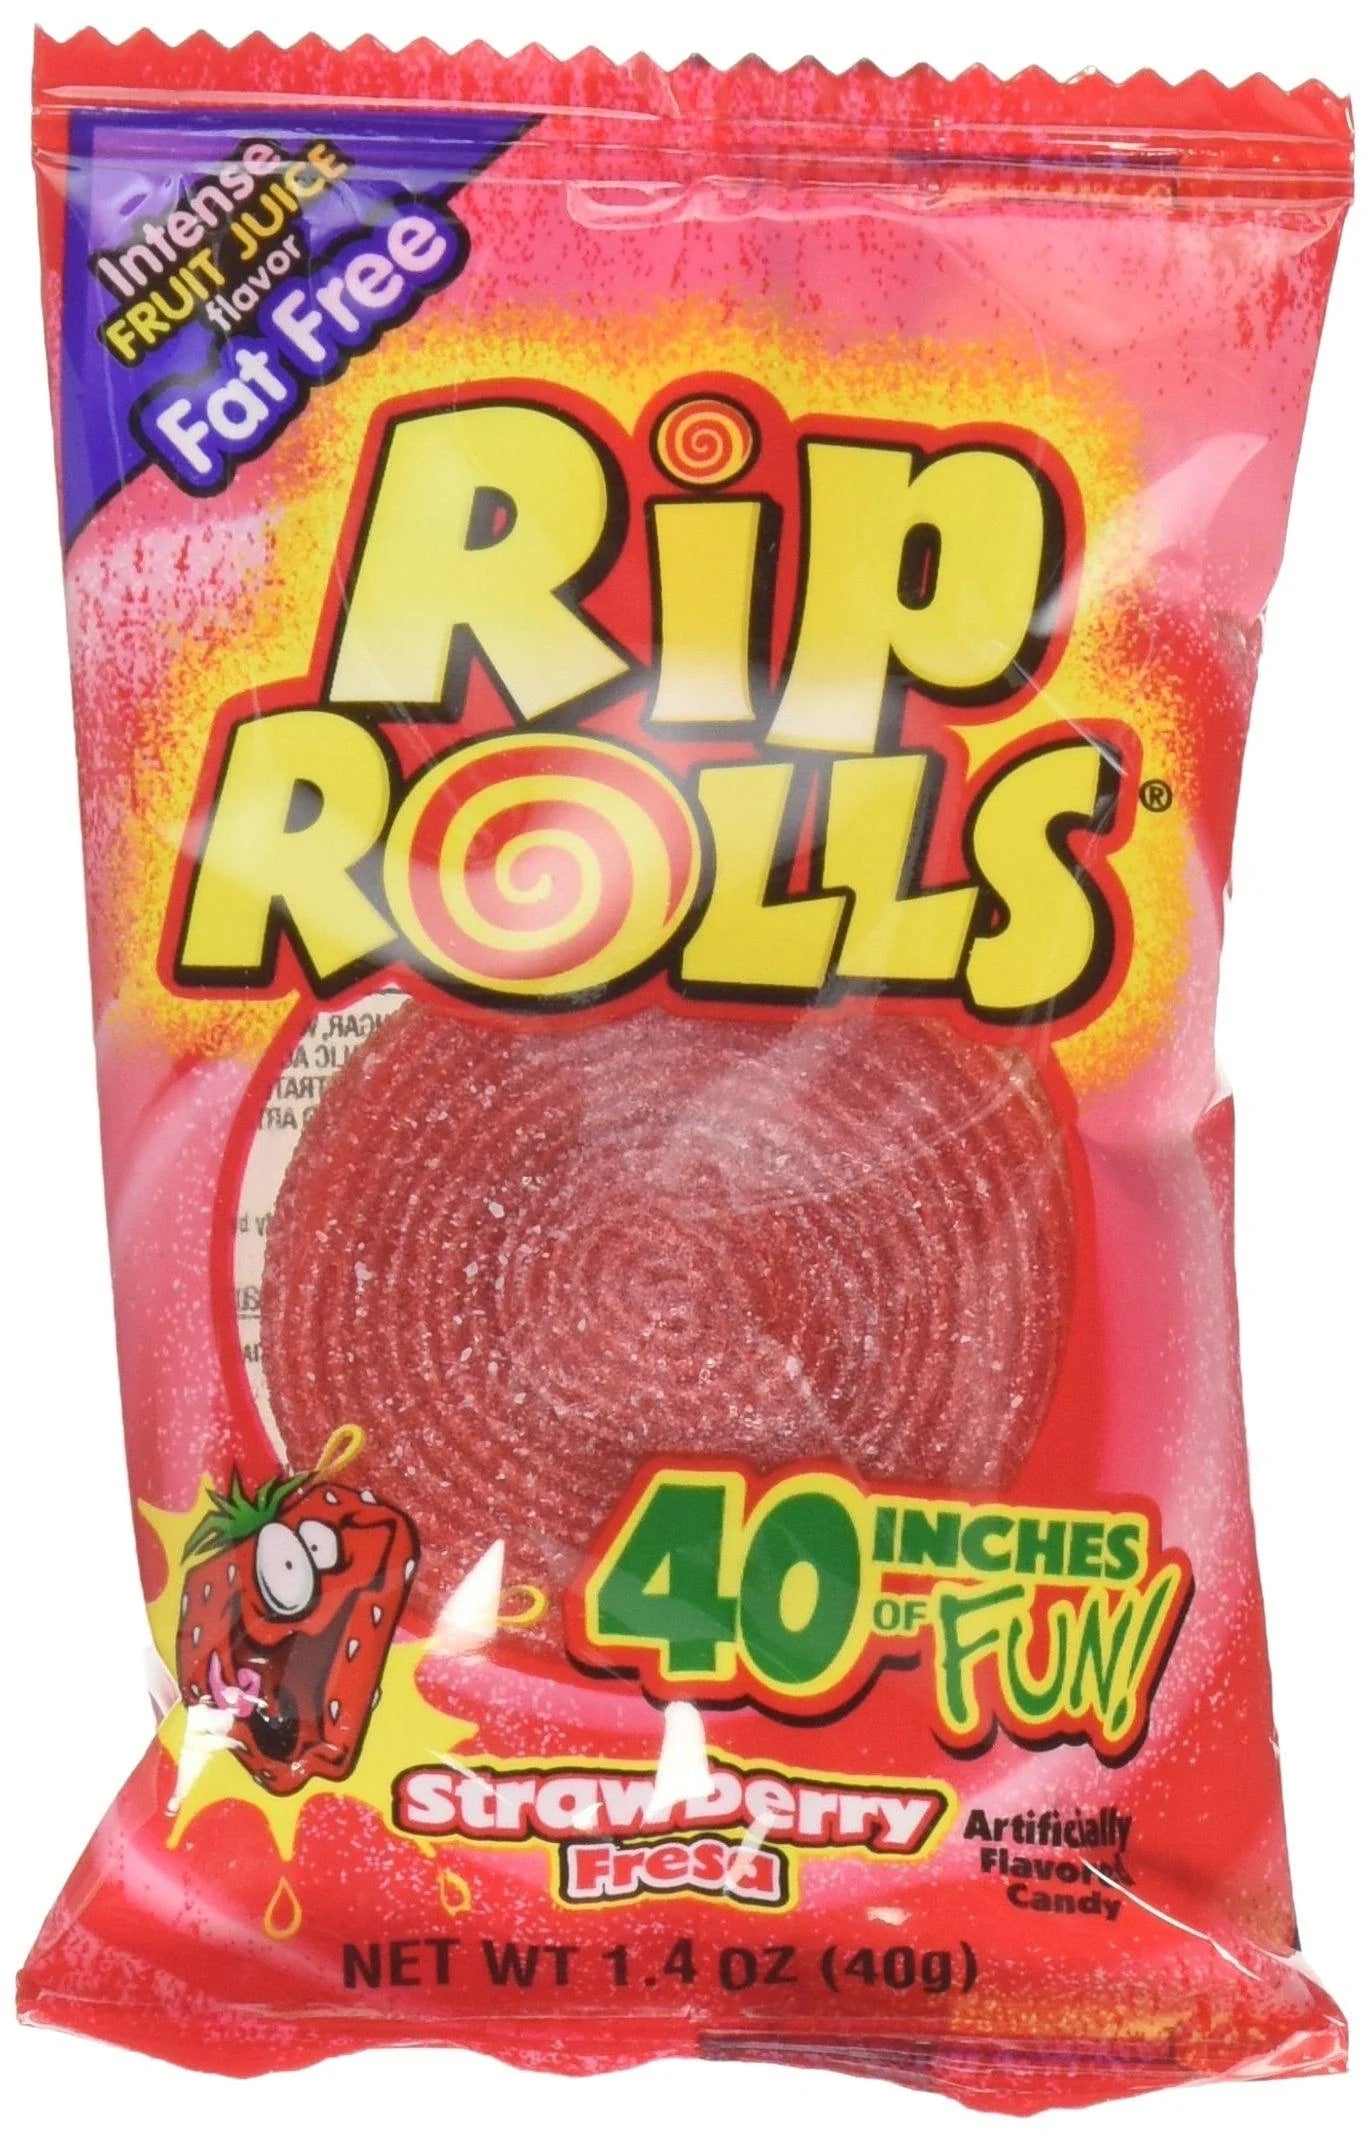 Rip Rolls Strawberry Candy